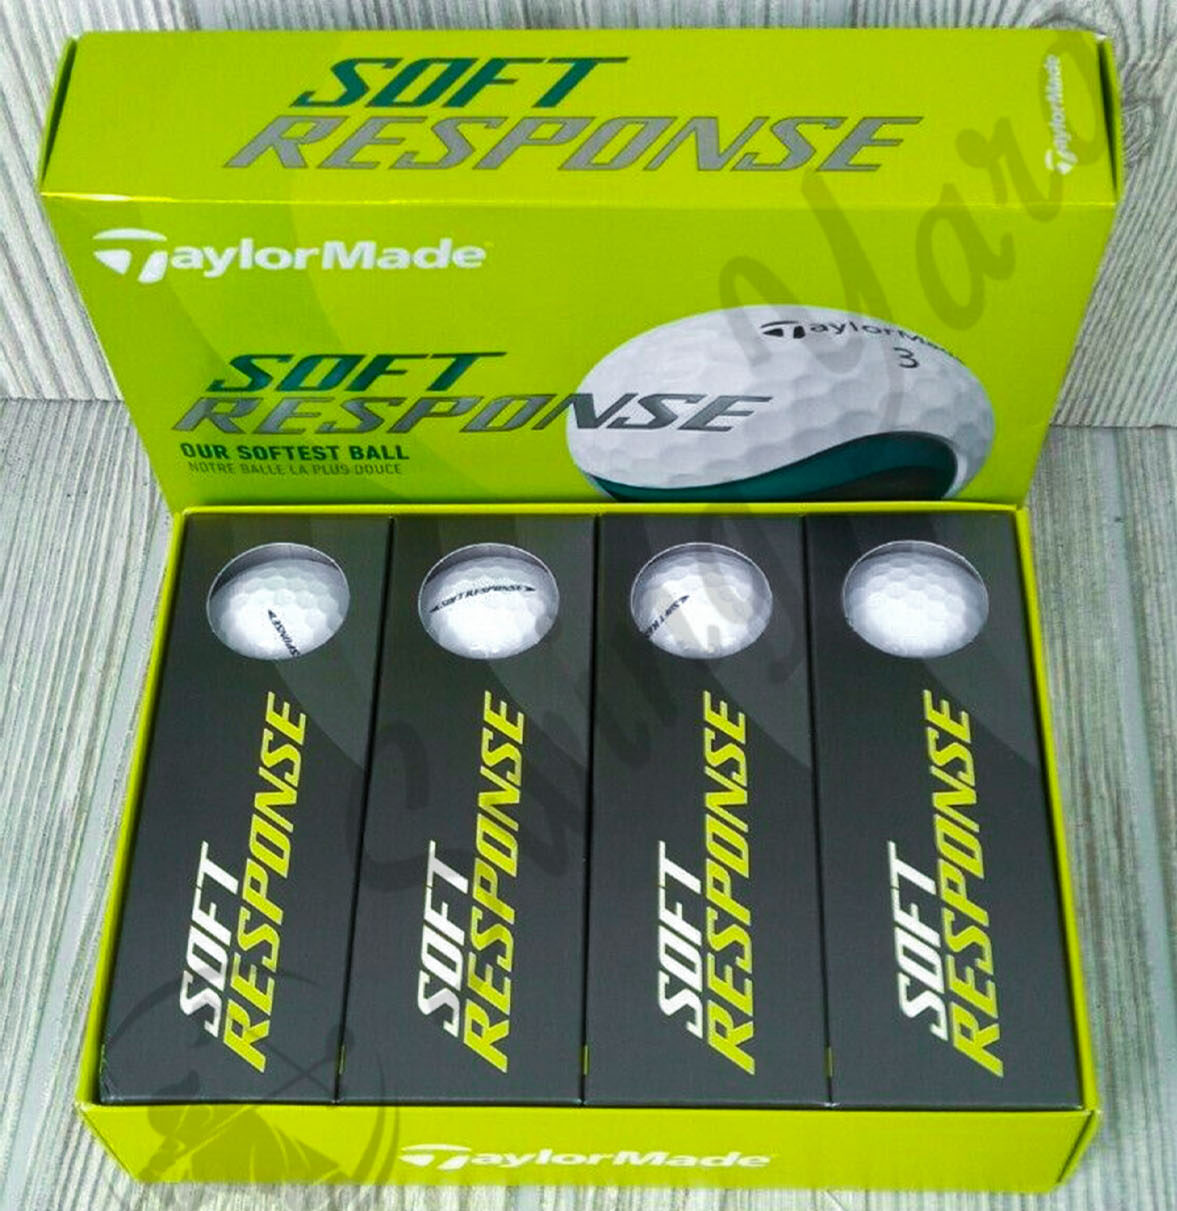 A box packaging of TaylorMade Soft Response golf balls